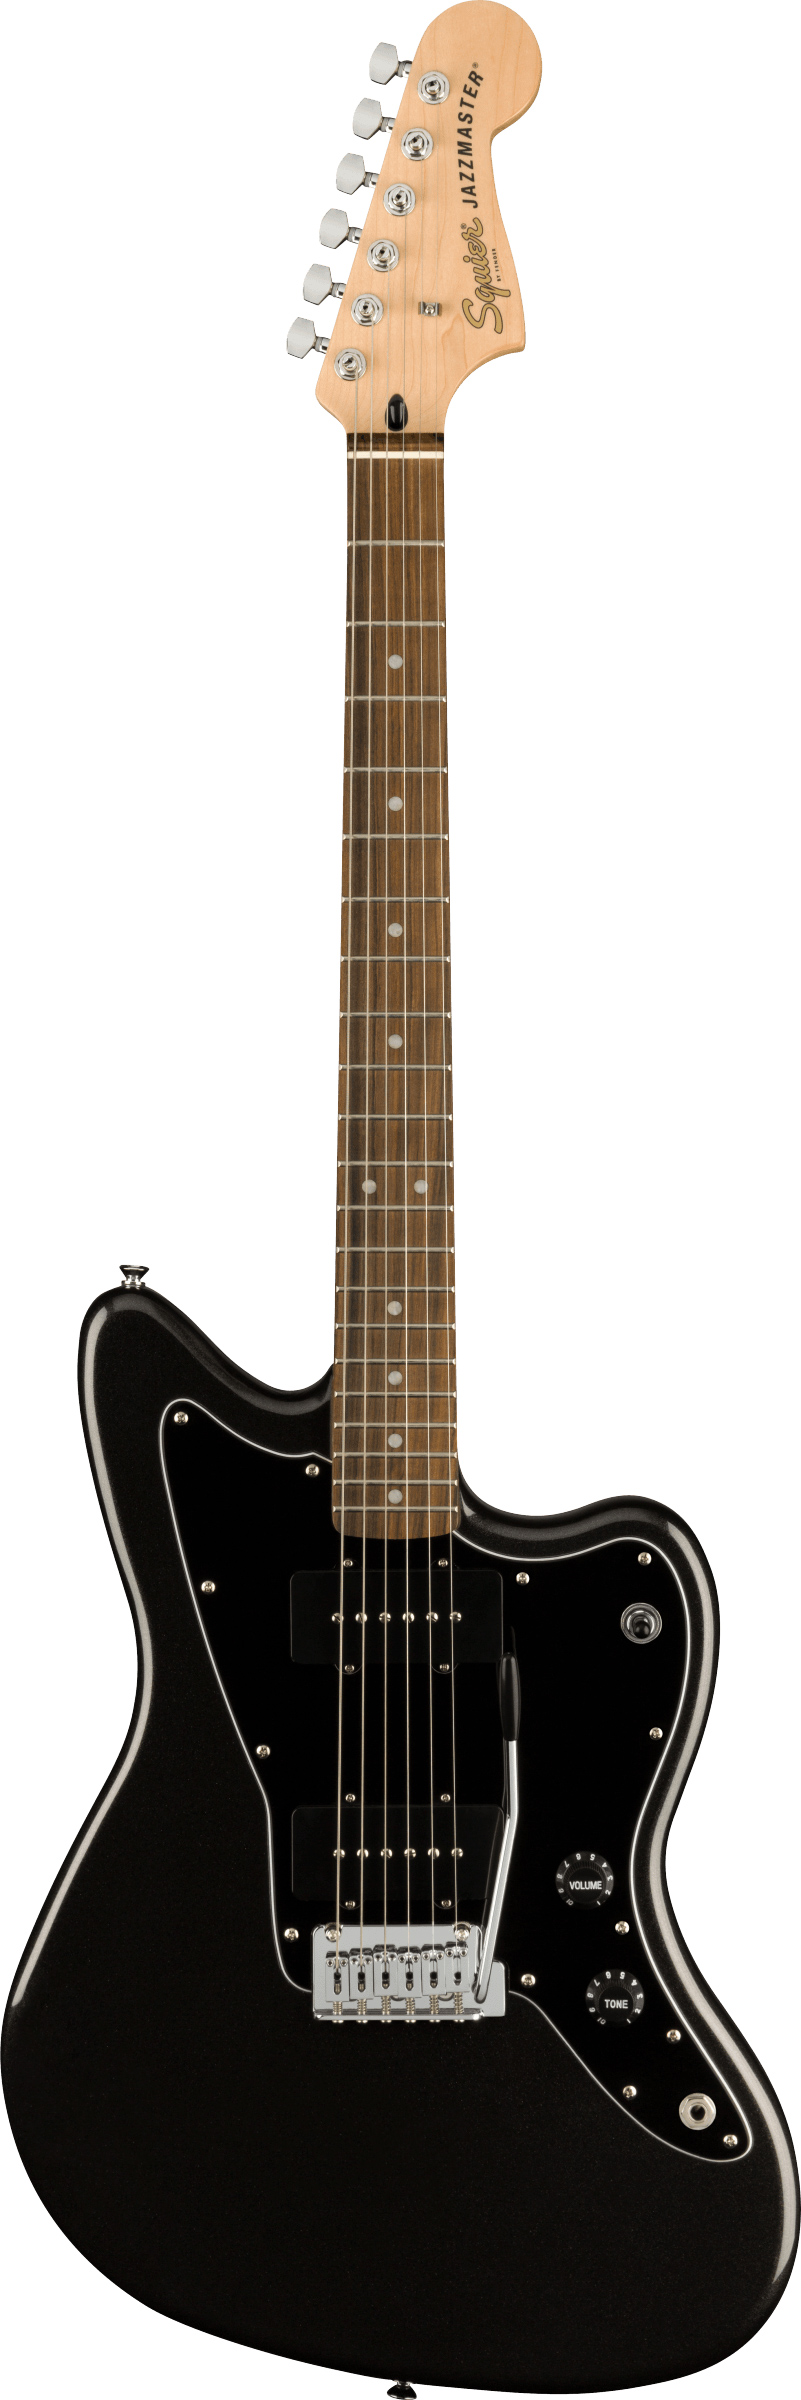 Fender Squier Affinity Jazzmaster - Metallic Black